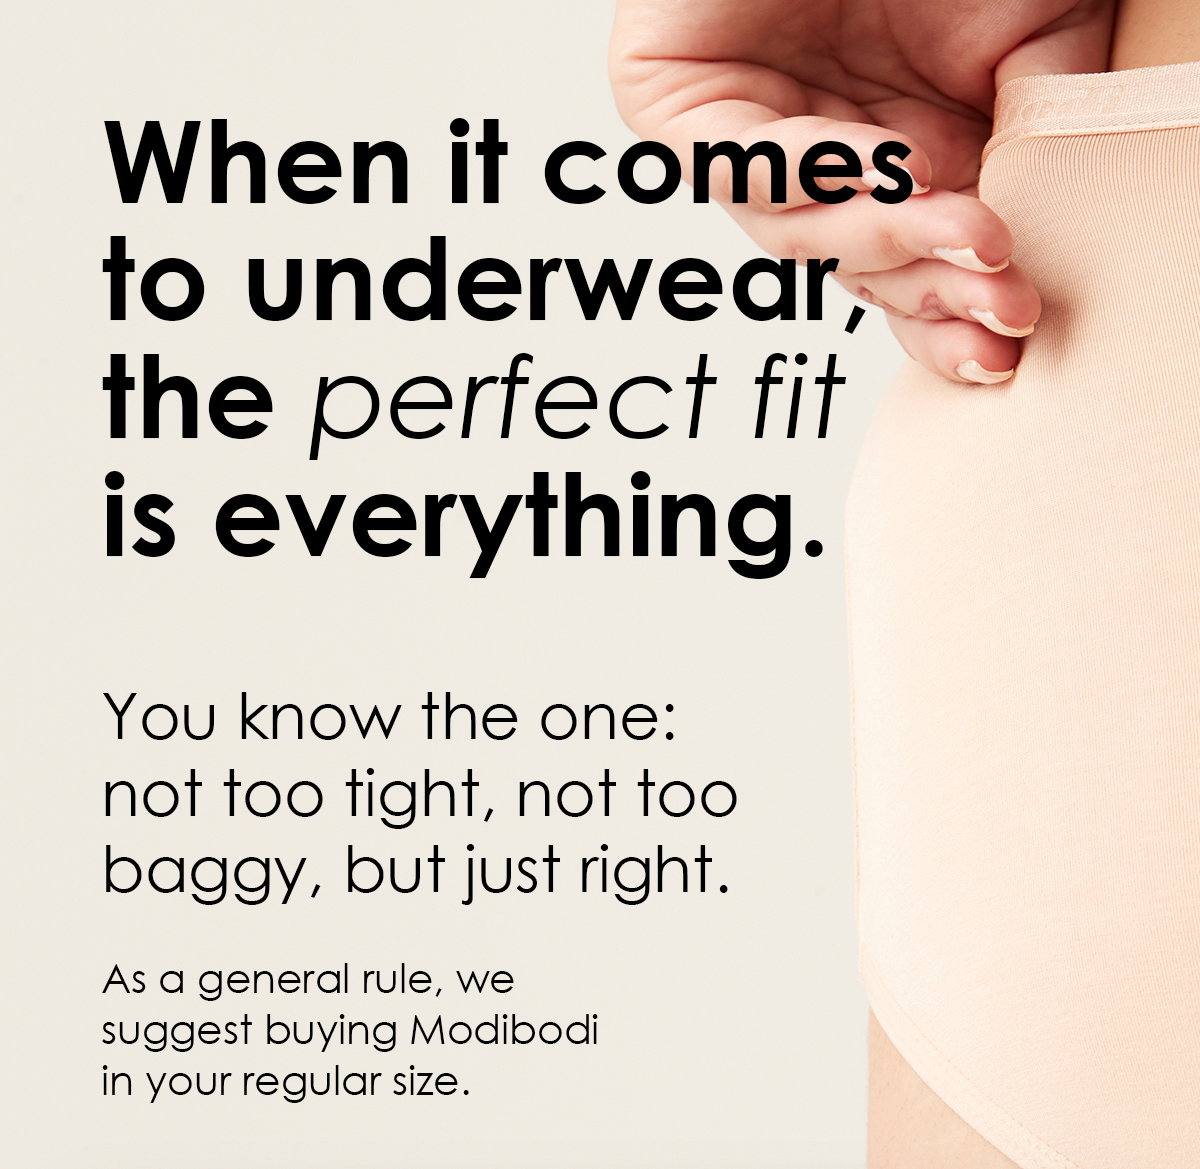 modibodi EU: Find your perfect fit